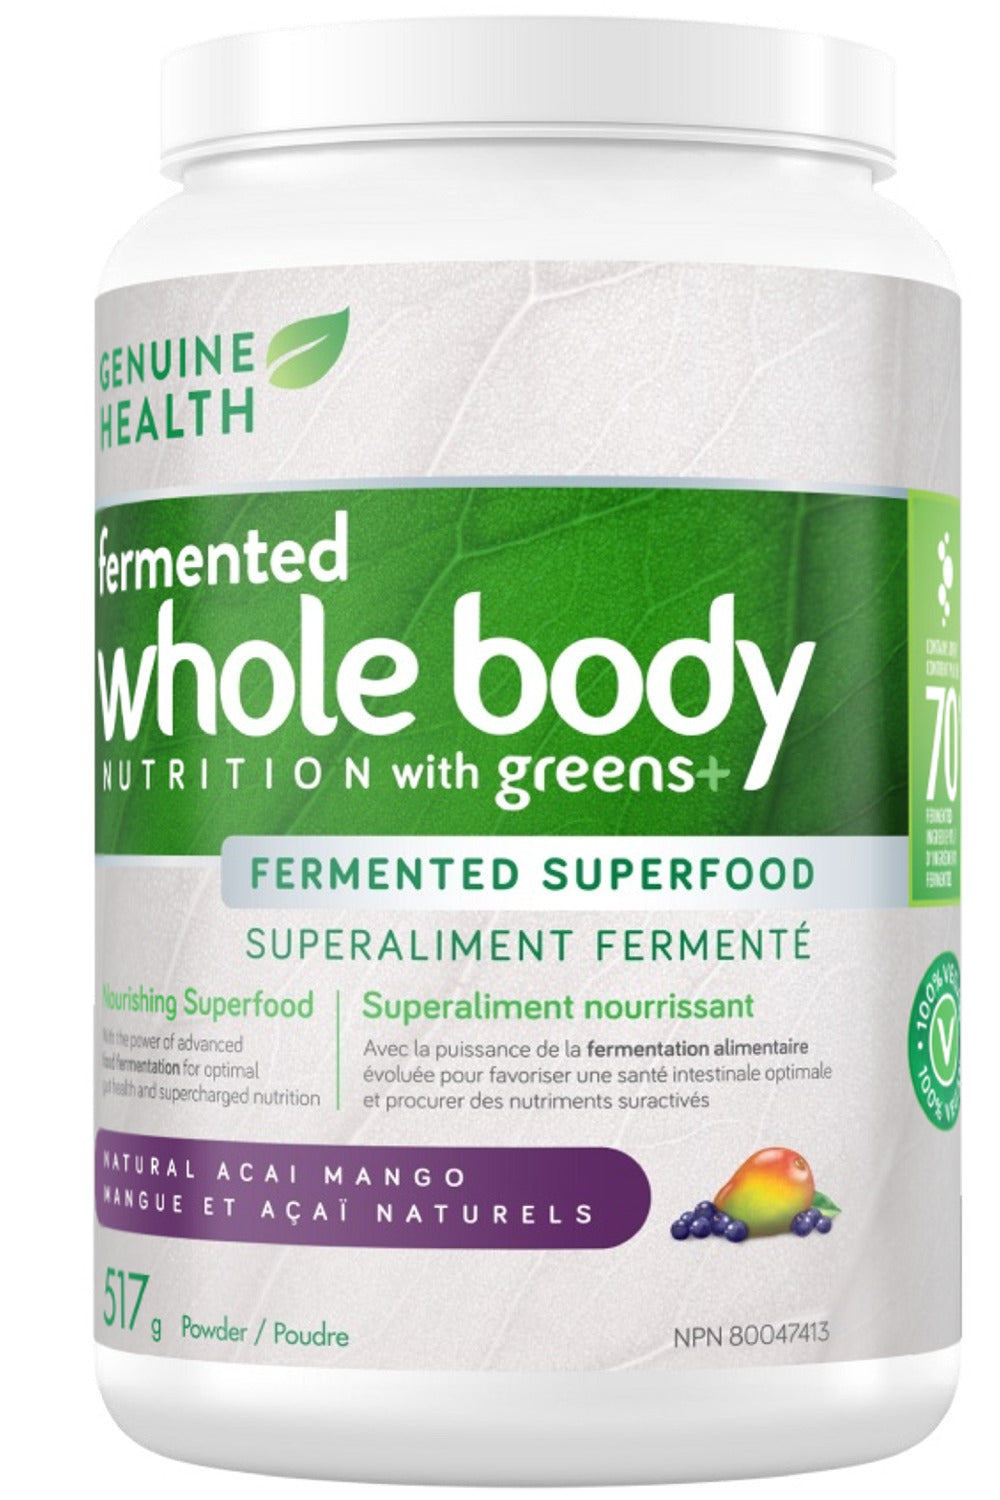 GENUINE HEALTH Fermented Whole Body NUTRITION With Greens+ (Acai Mango - 517 gr)